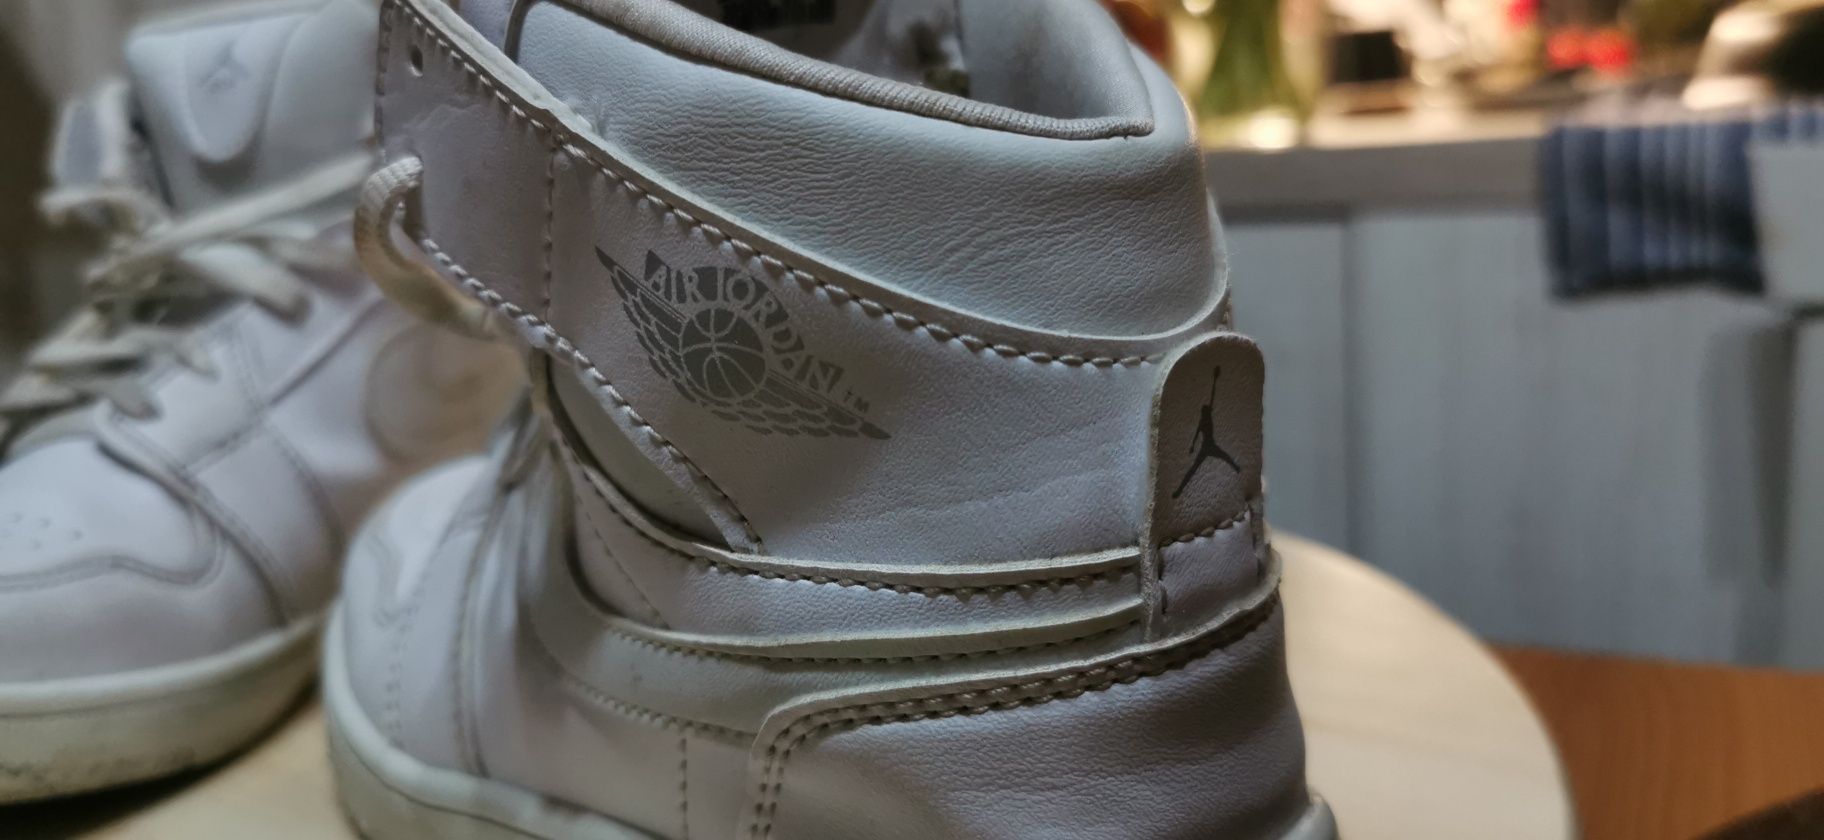 Buty Nike Air Jordan 1 białe r. 33